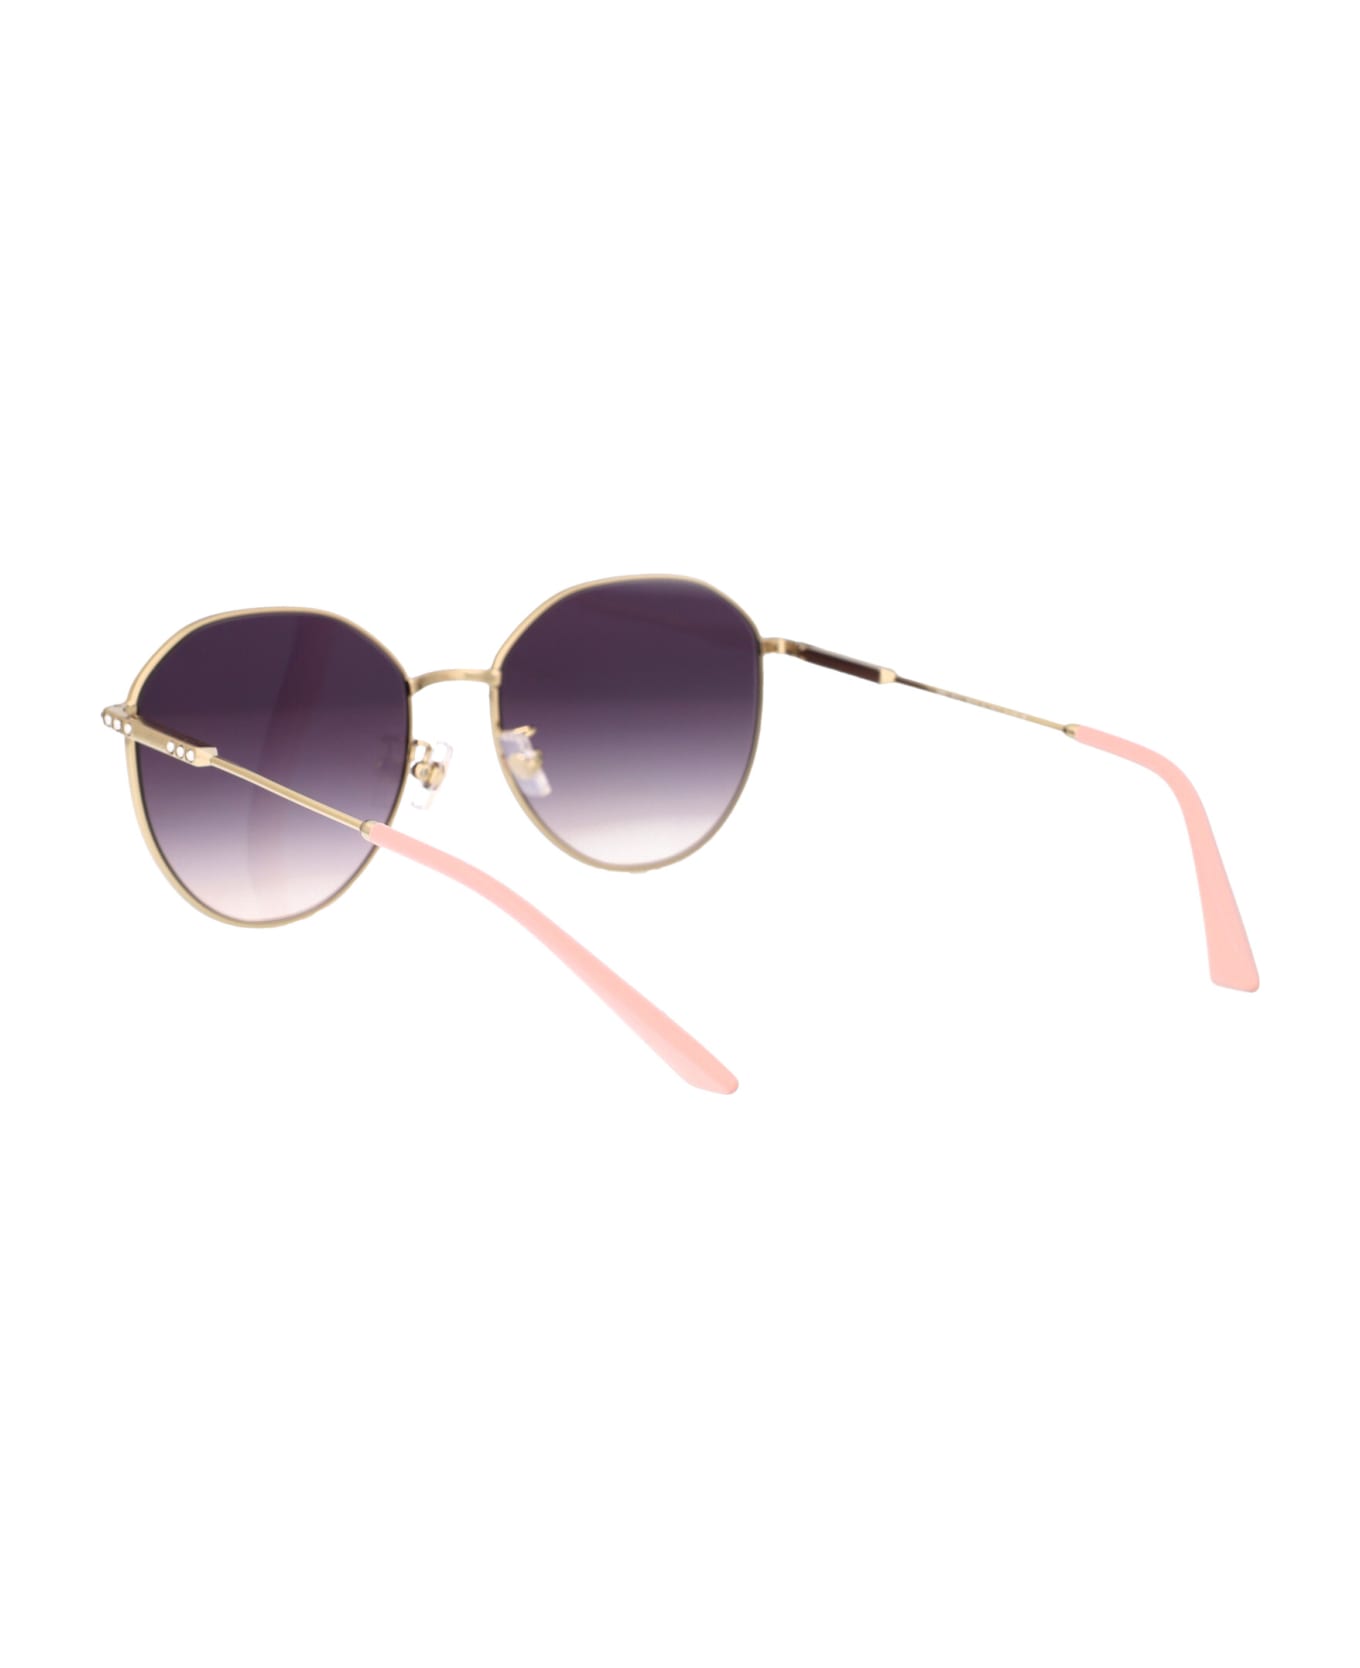 Jimmy Choo Eyewear 0jc4007bd Sunglasses - 300636 Pale Gold